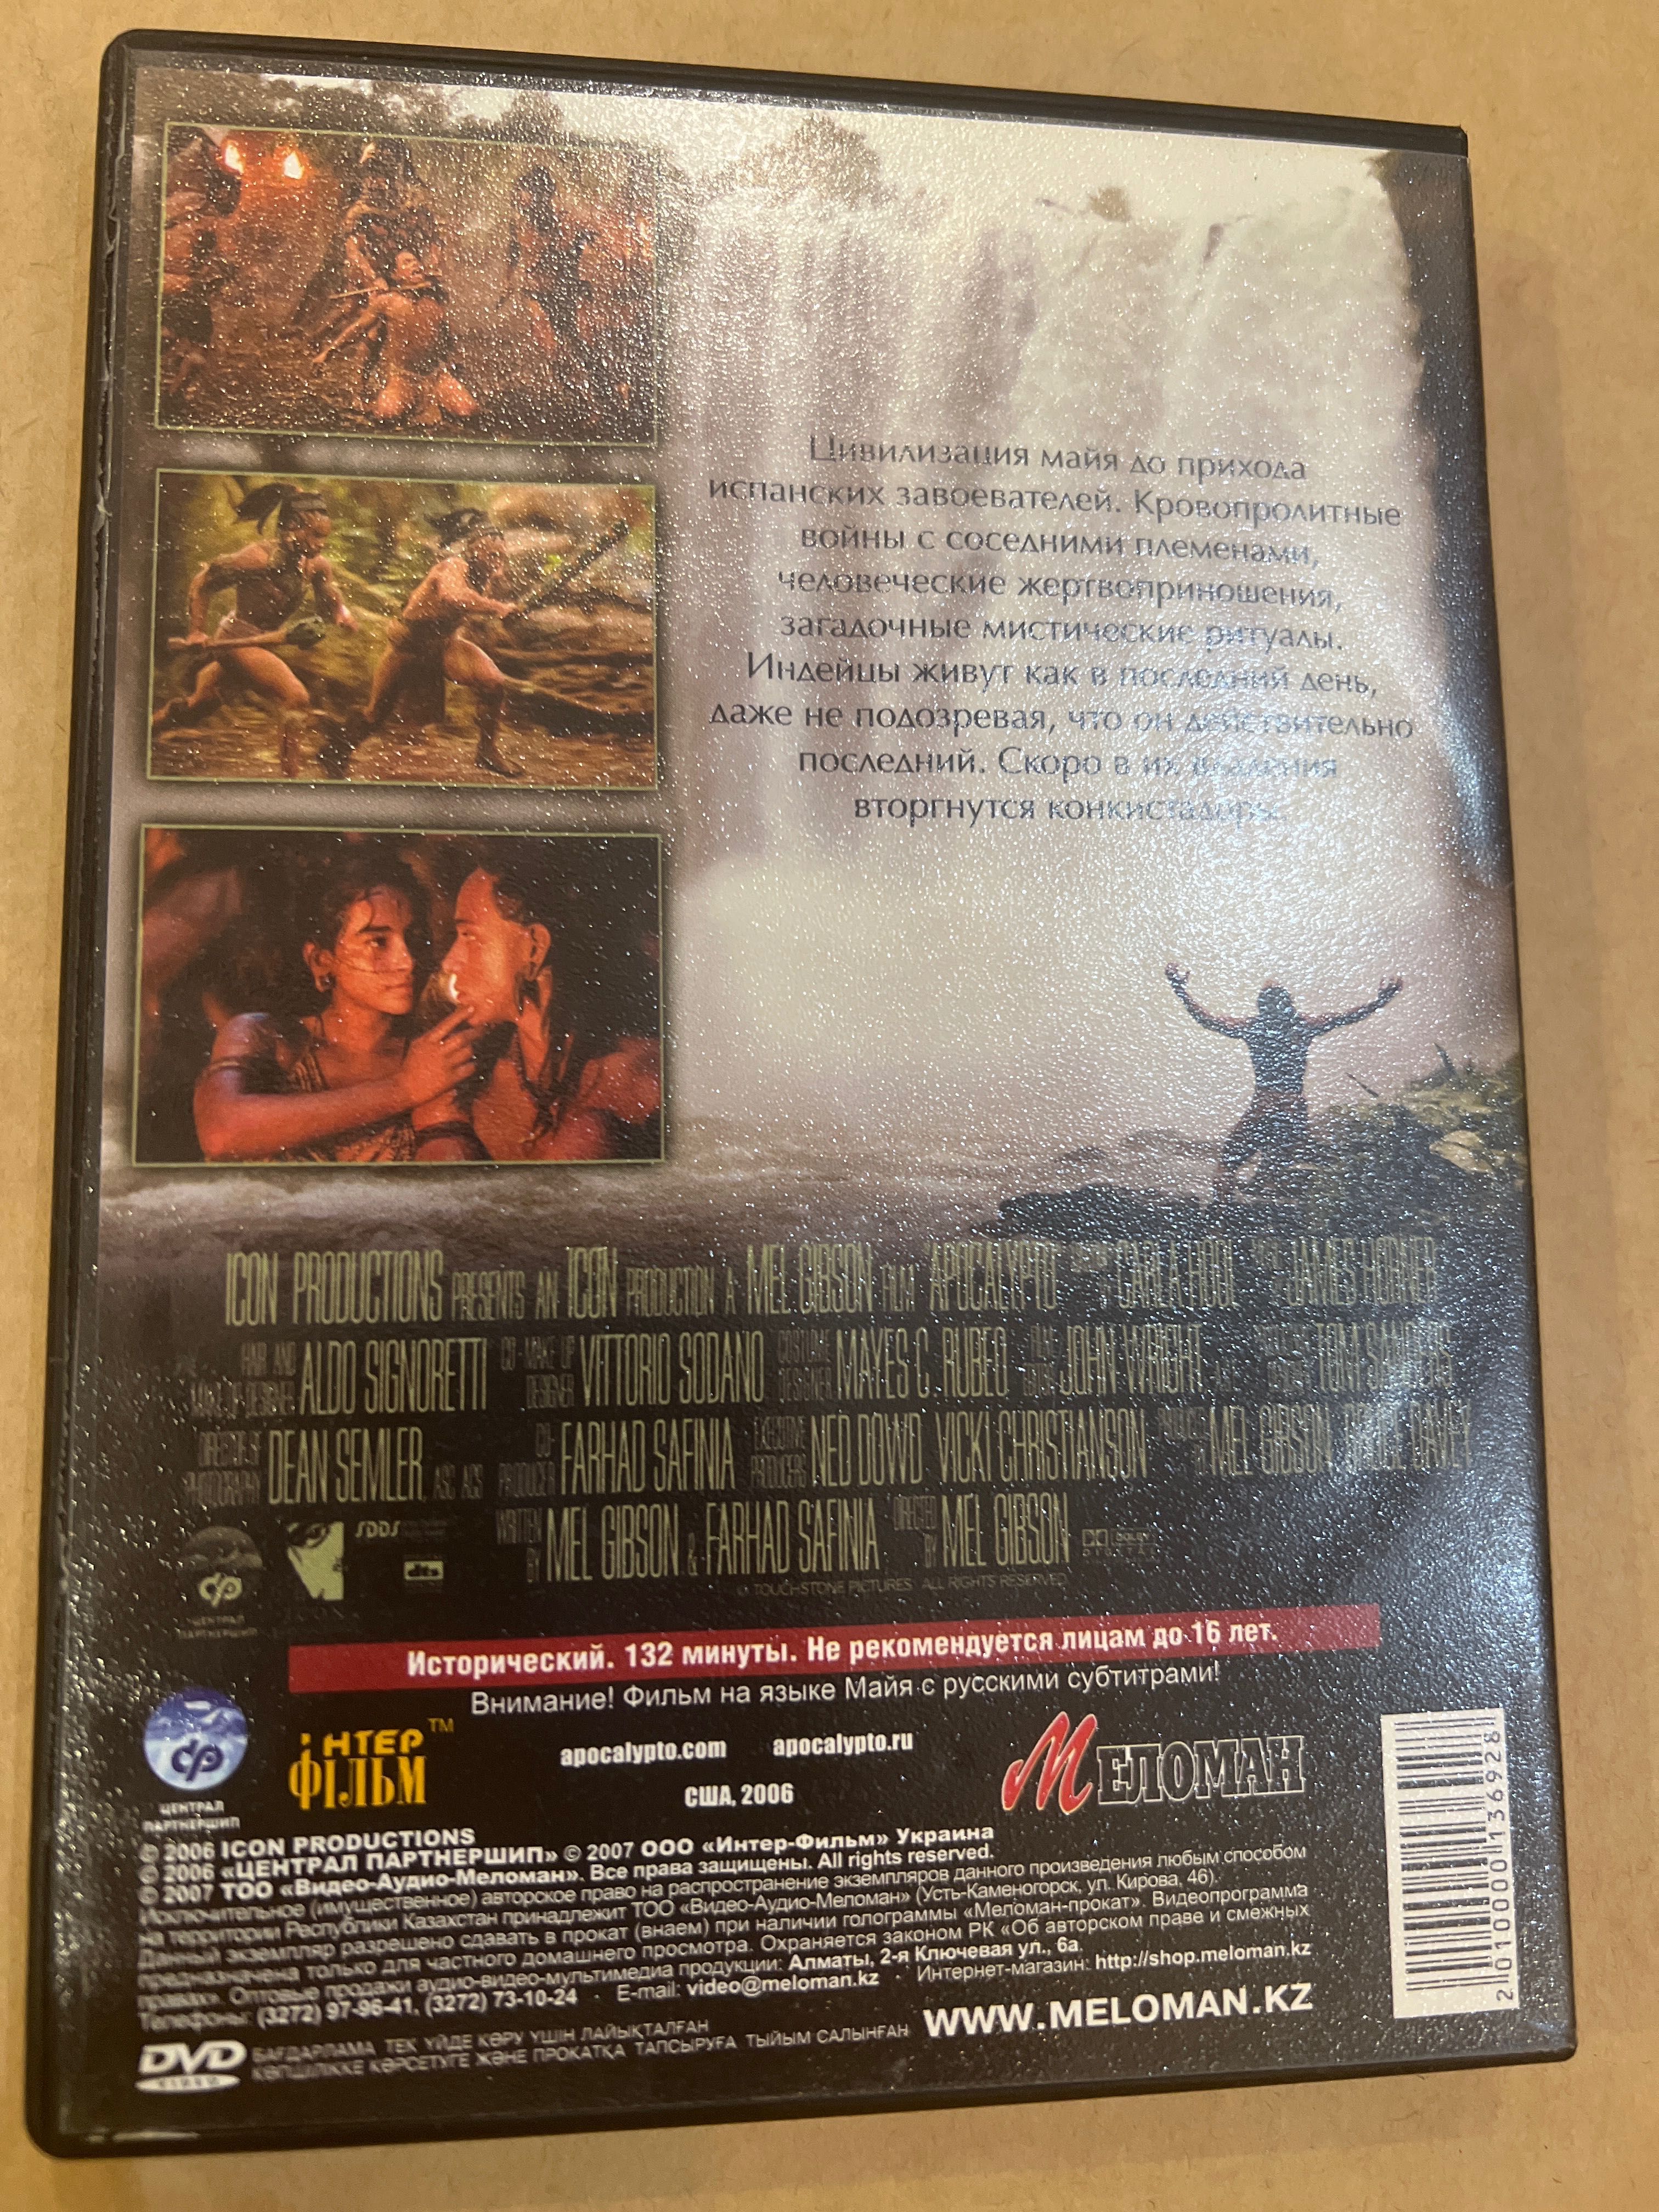 DVD диск - фильм Апокалипсис